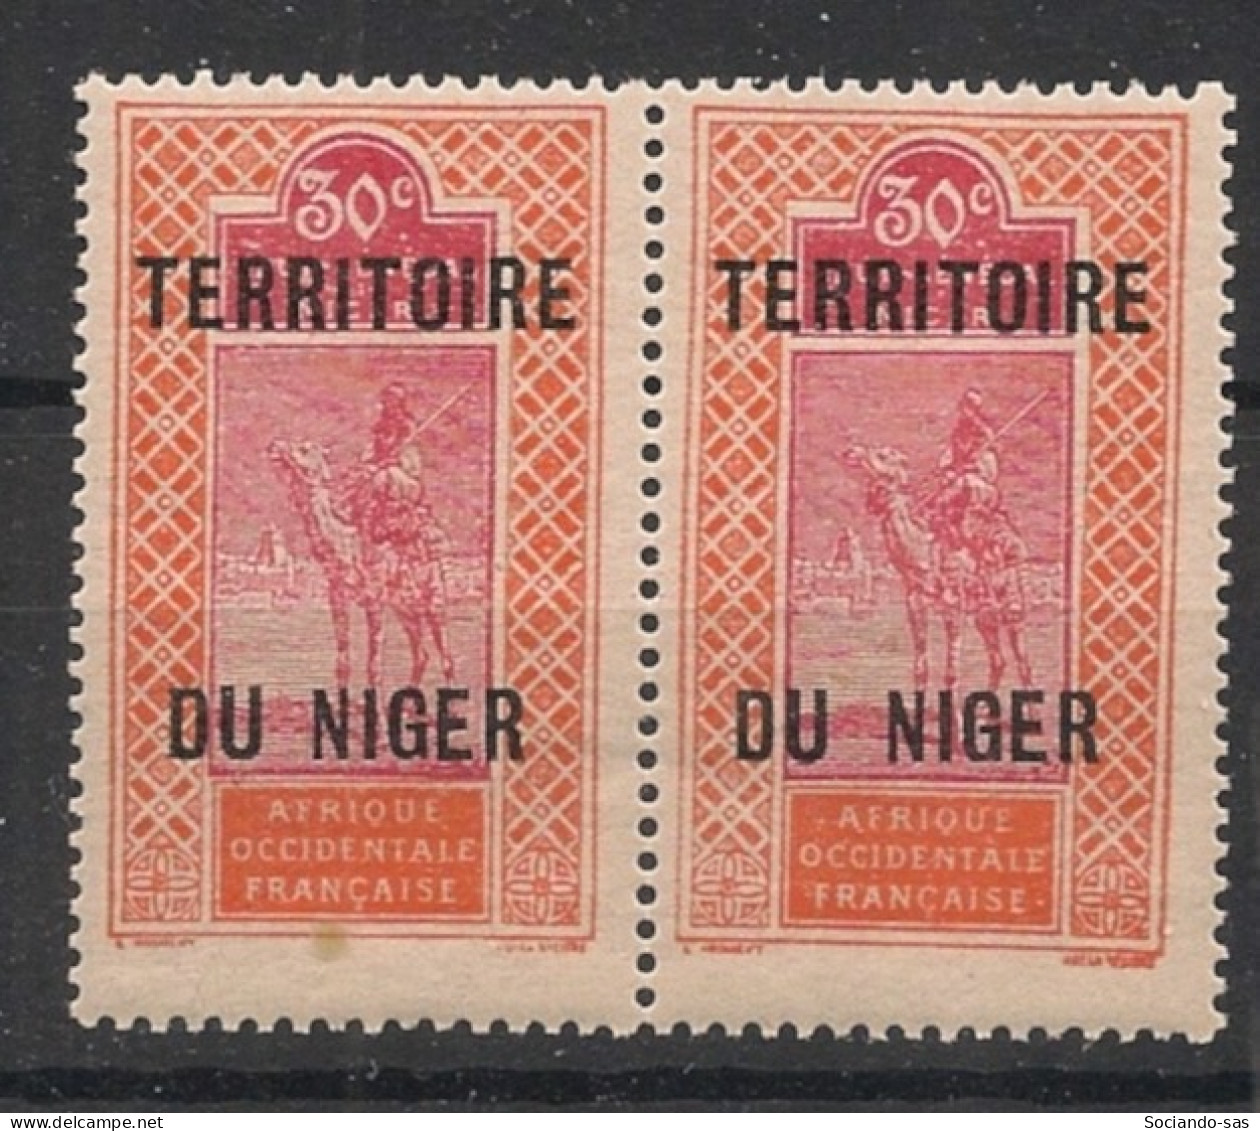 NIGER - 1921-22 - N°YT 9Aa - Targui 30c Rouge - VARIETE DU Et NIGER Espacés T.a.n. - Neuf Luxe ** / MNH / Postfrisch - Nuovi